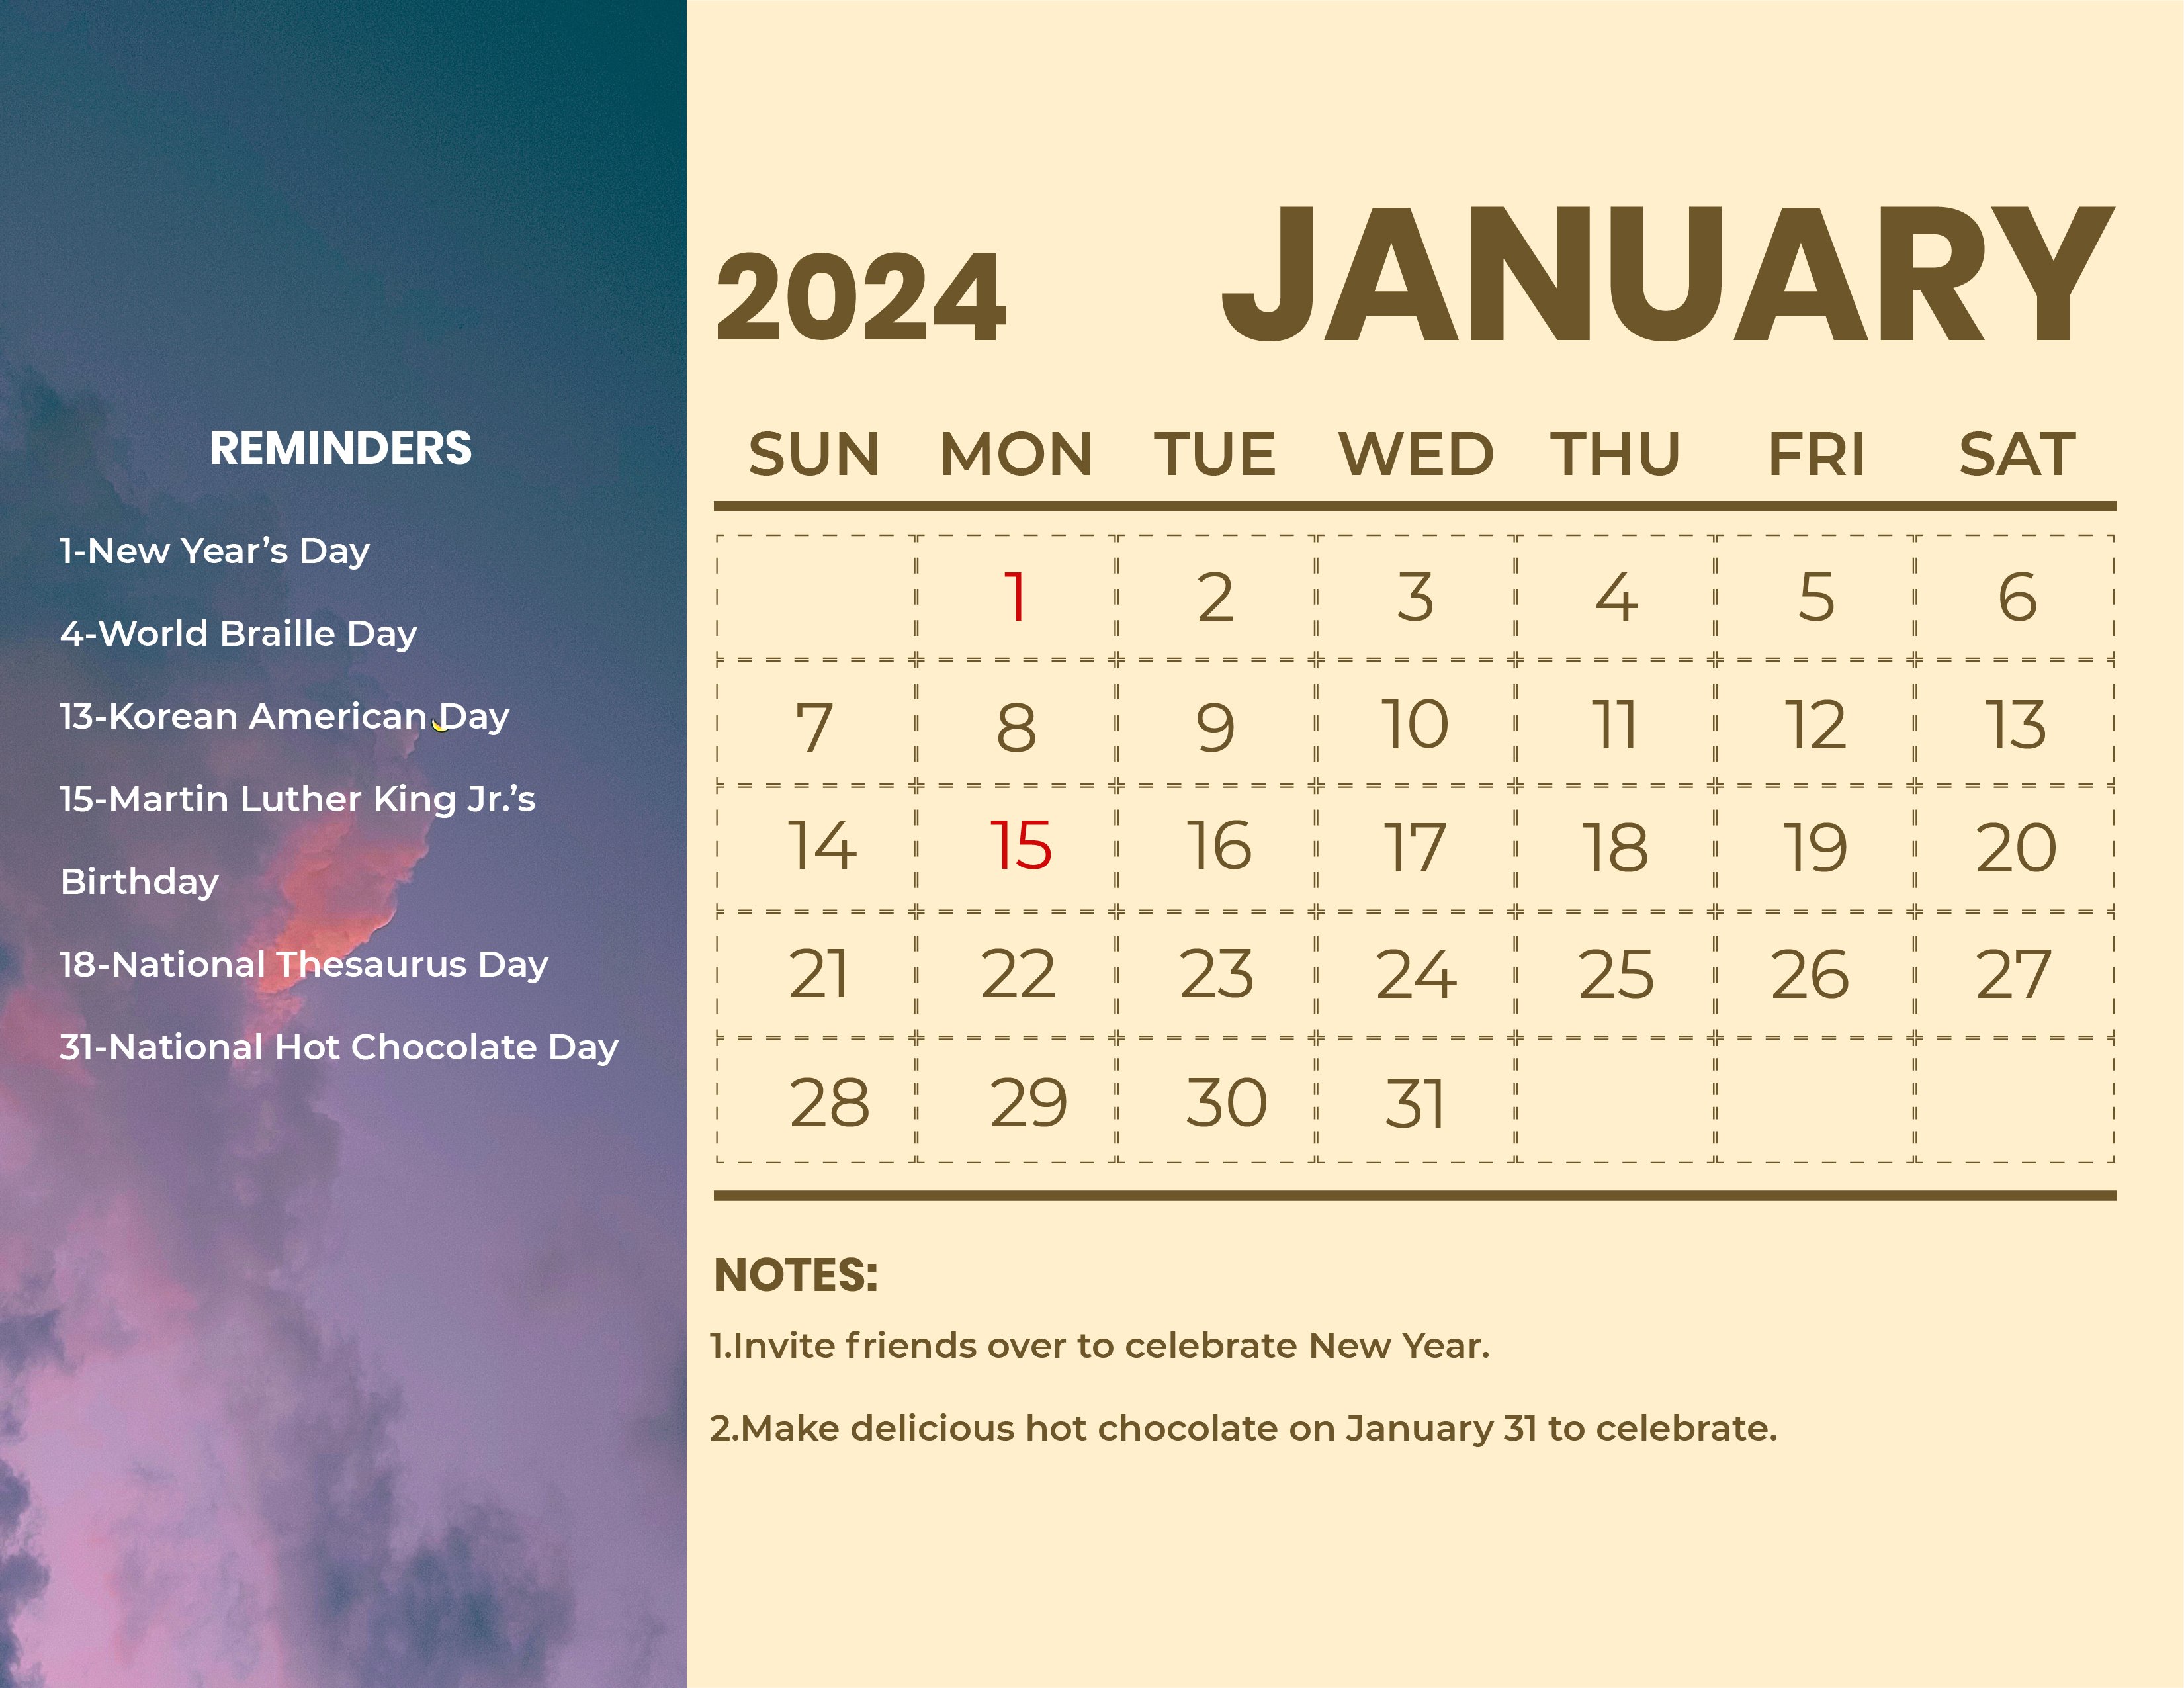 January 2024 Calendar Wallpapers Wallpaper Cave